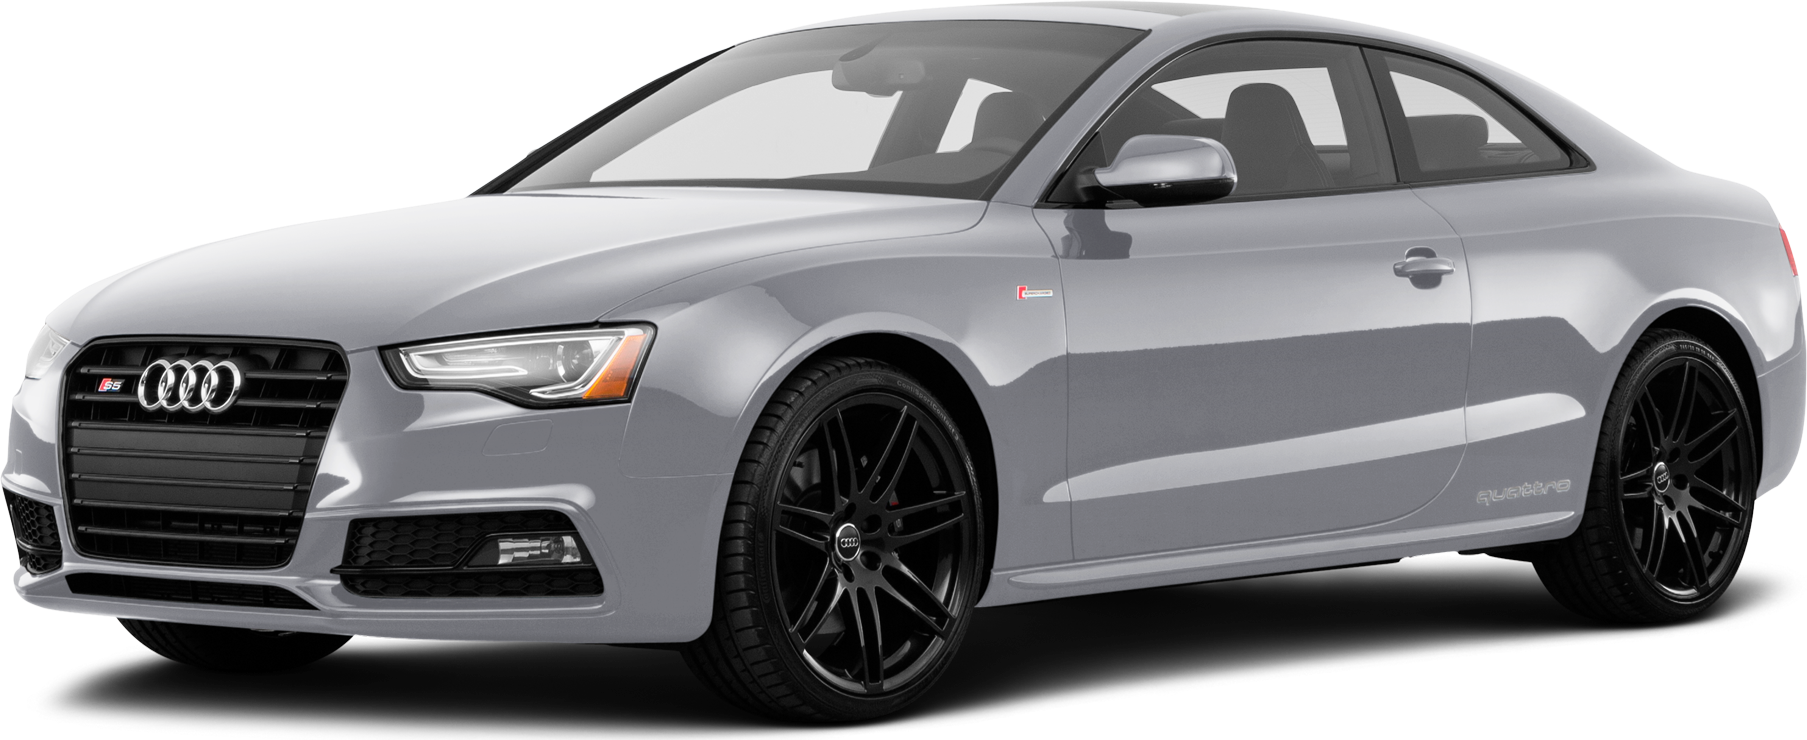 2019 Audi S5 Price, Value, Ratings & Reviews